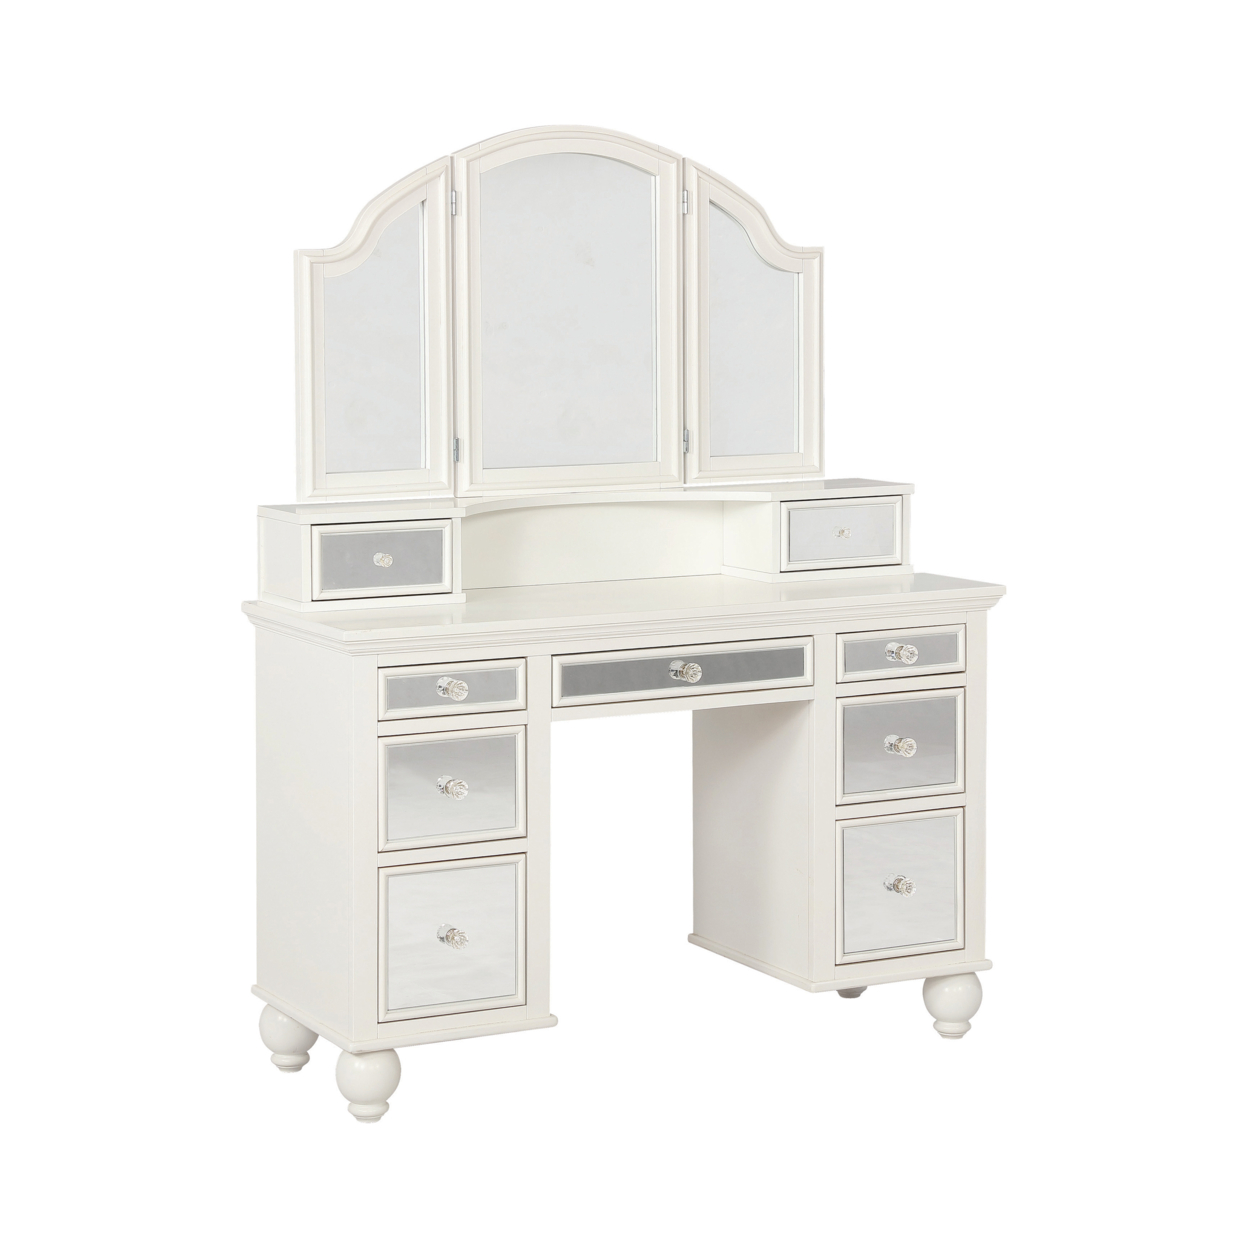 2 Piece Vanity Desk Set With 9 Drawers And Padded Seat, White- Saltoro Sherpi